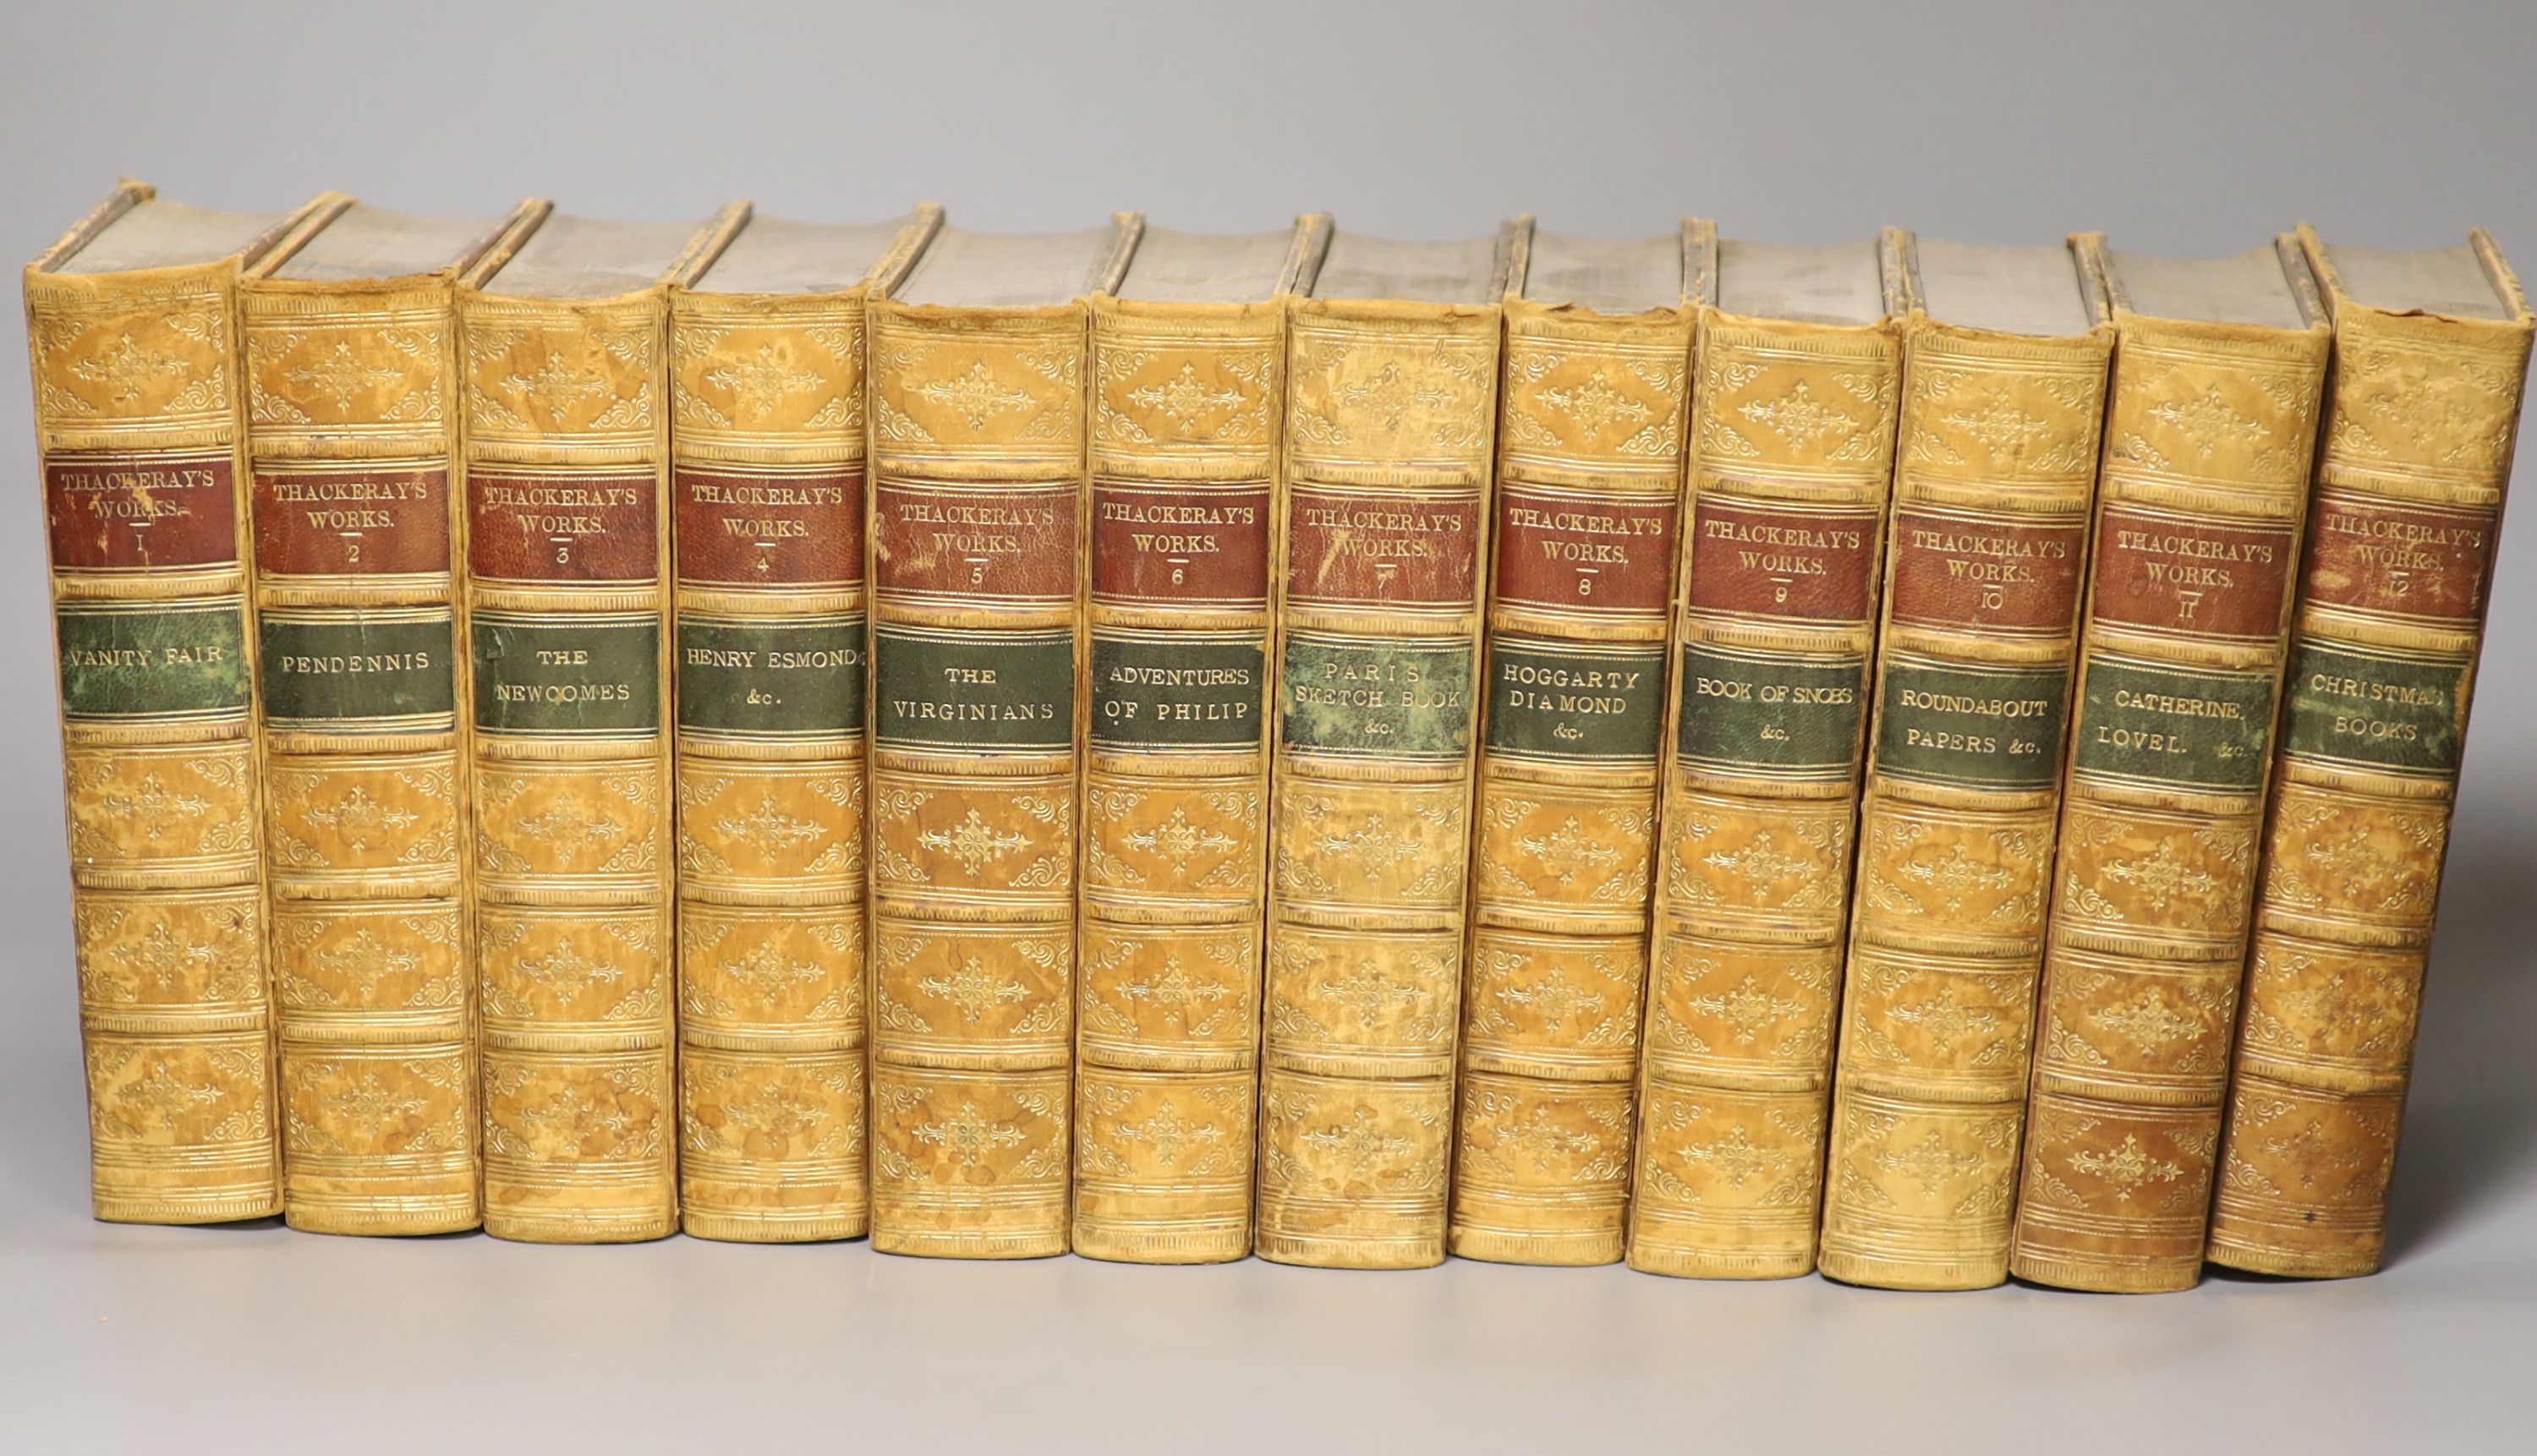 Thackeray, William, Makepeace - The Works, 12 vols, 8vo, calf, Smith, Elder & Co., London, 1871